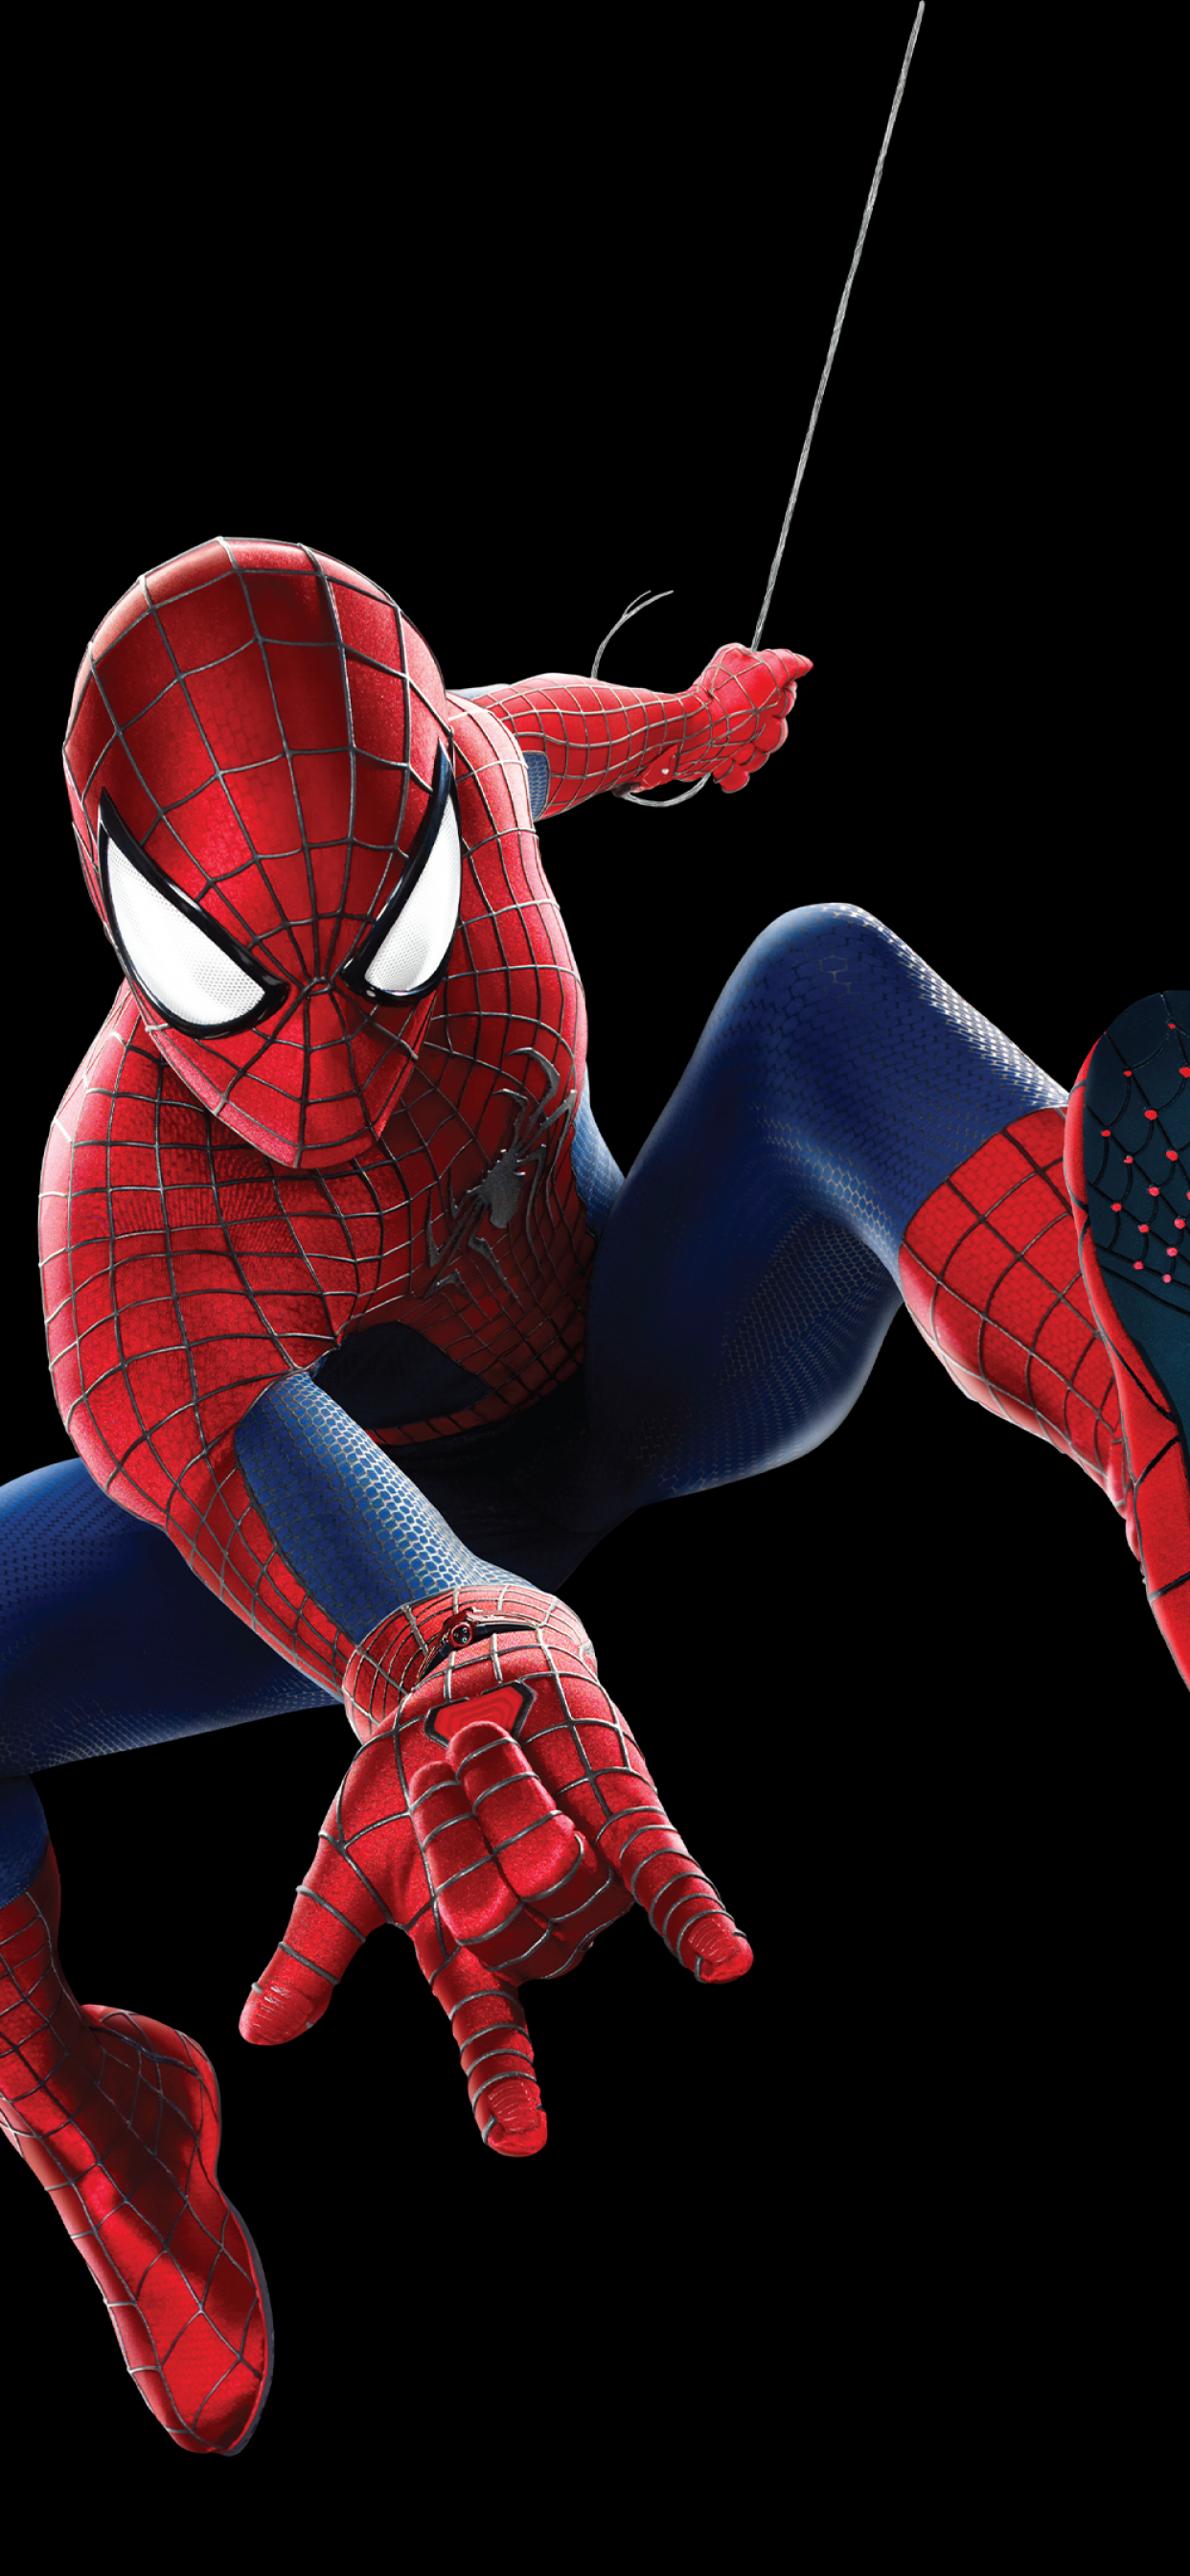 Spider Man 4K Wallpaper, Marvel Superheroes, Black Background, Graphics CGI